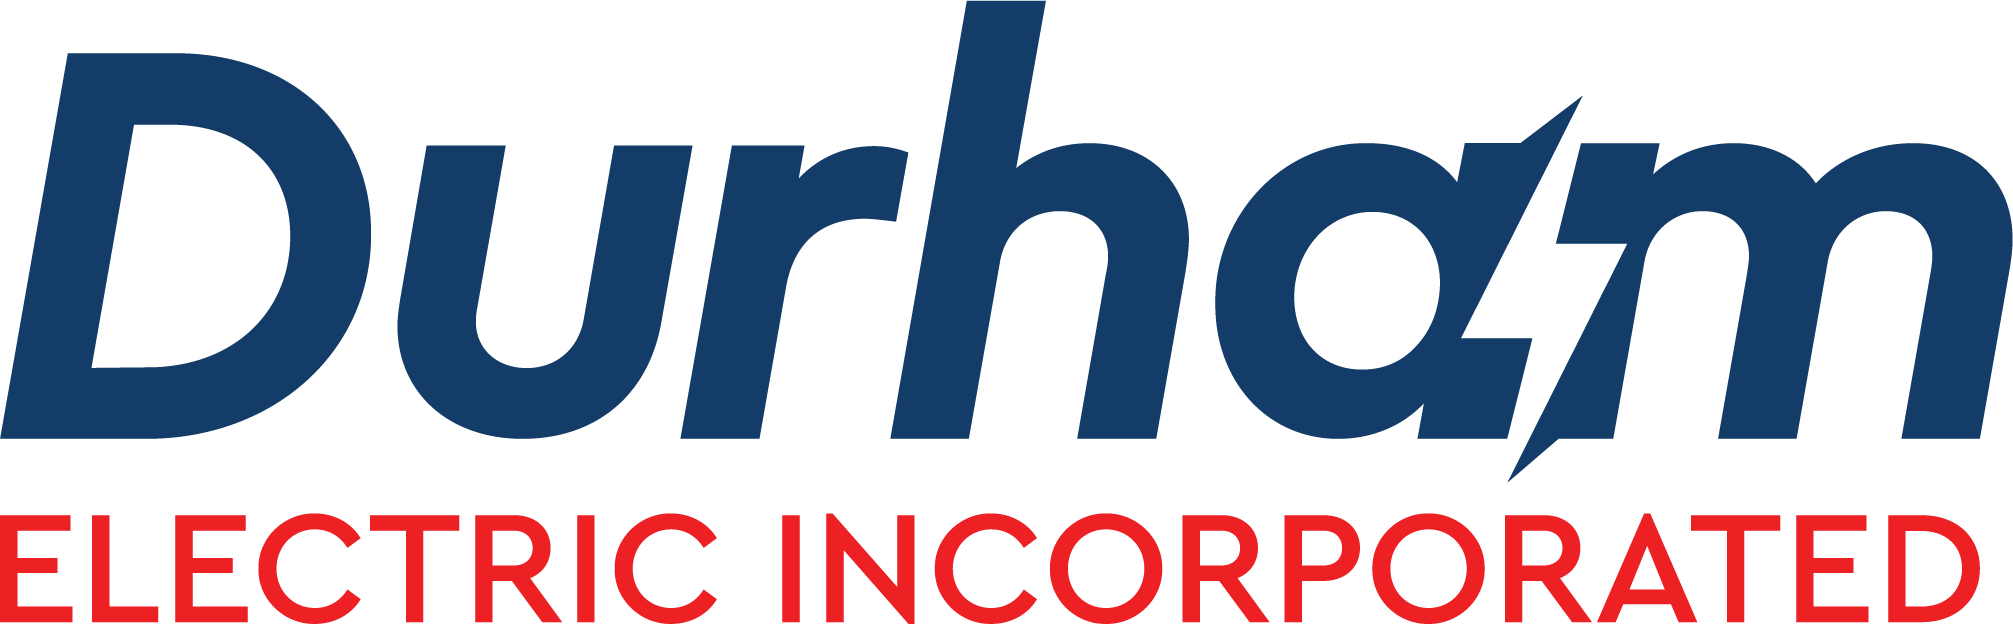 durham electric logo logo and link